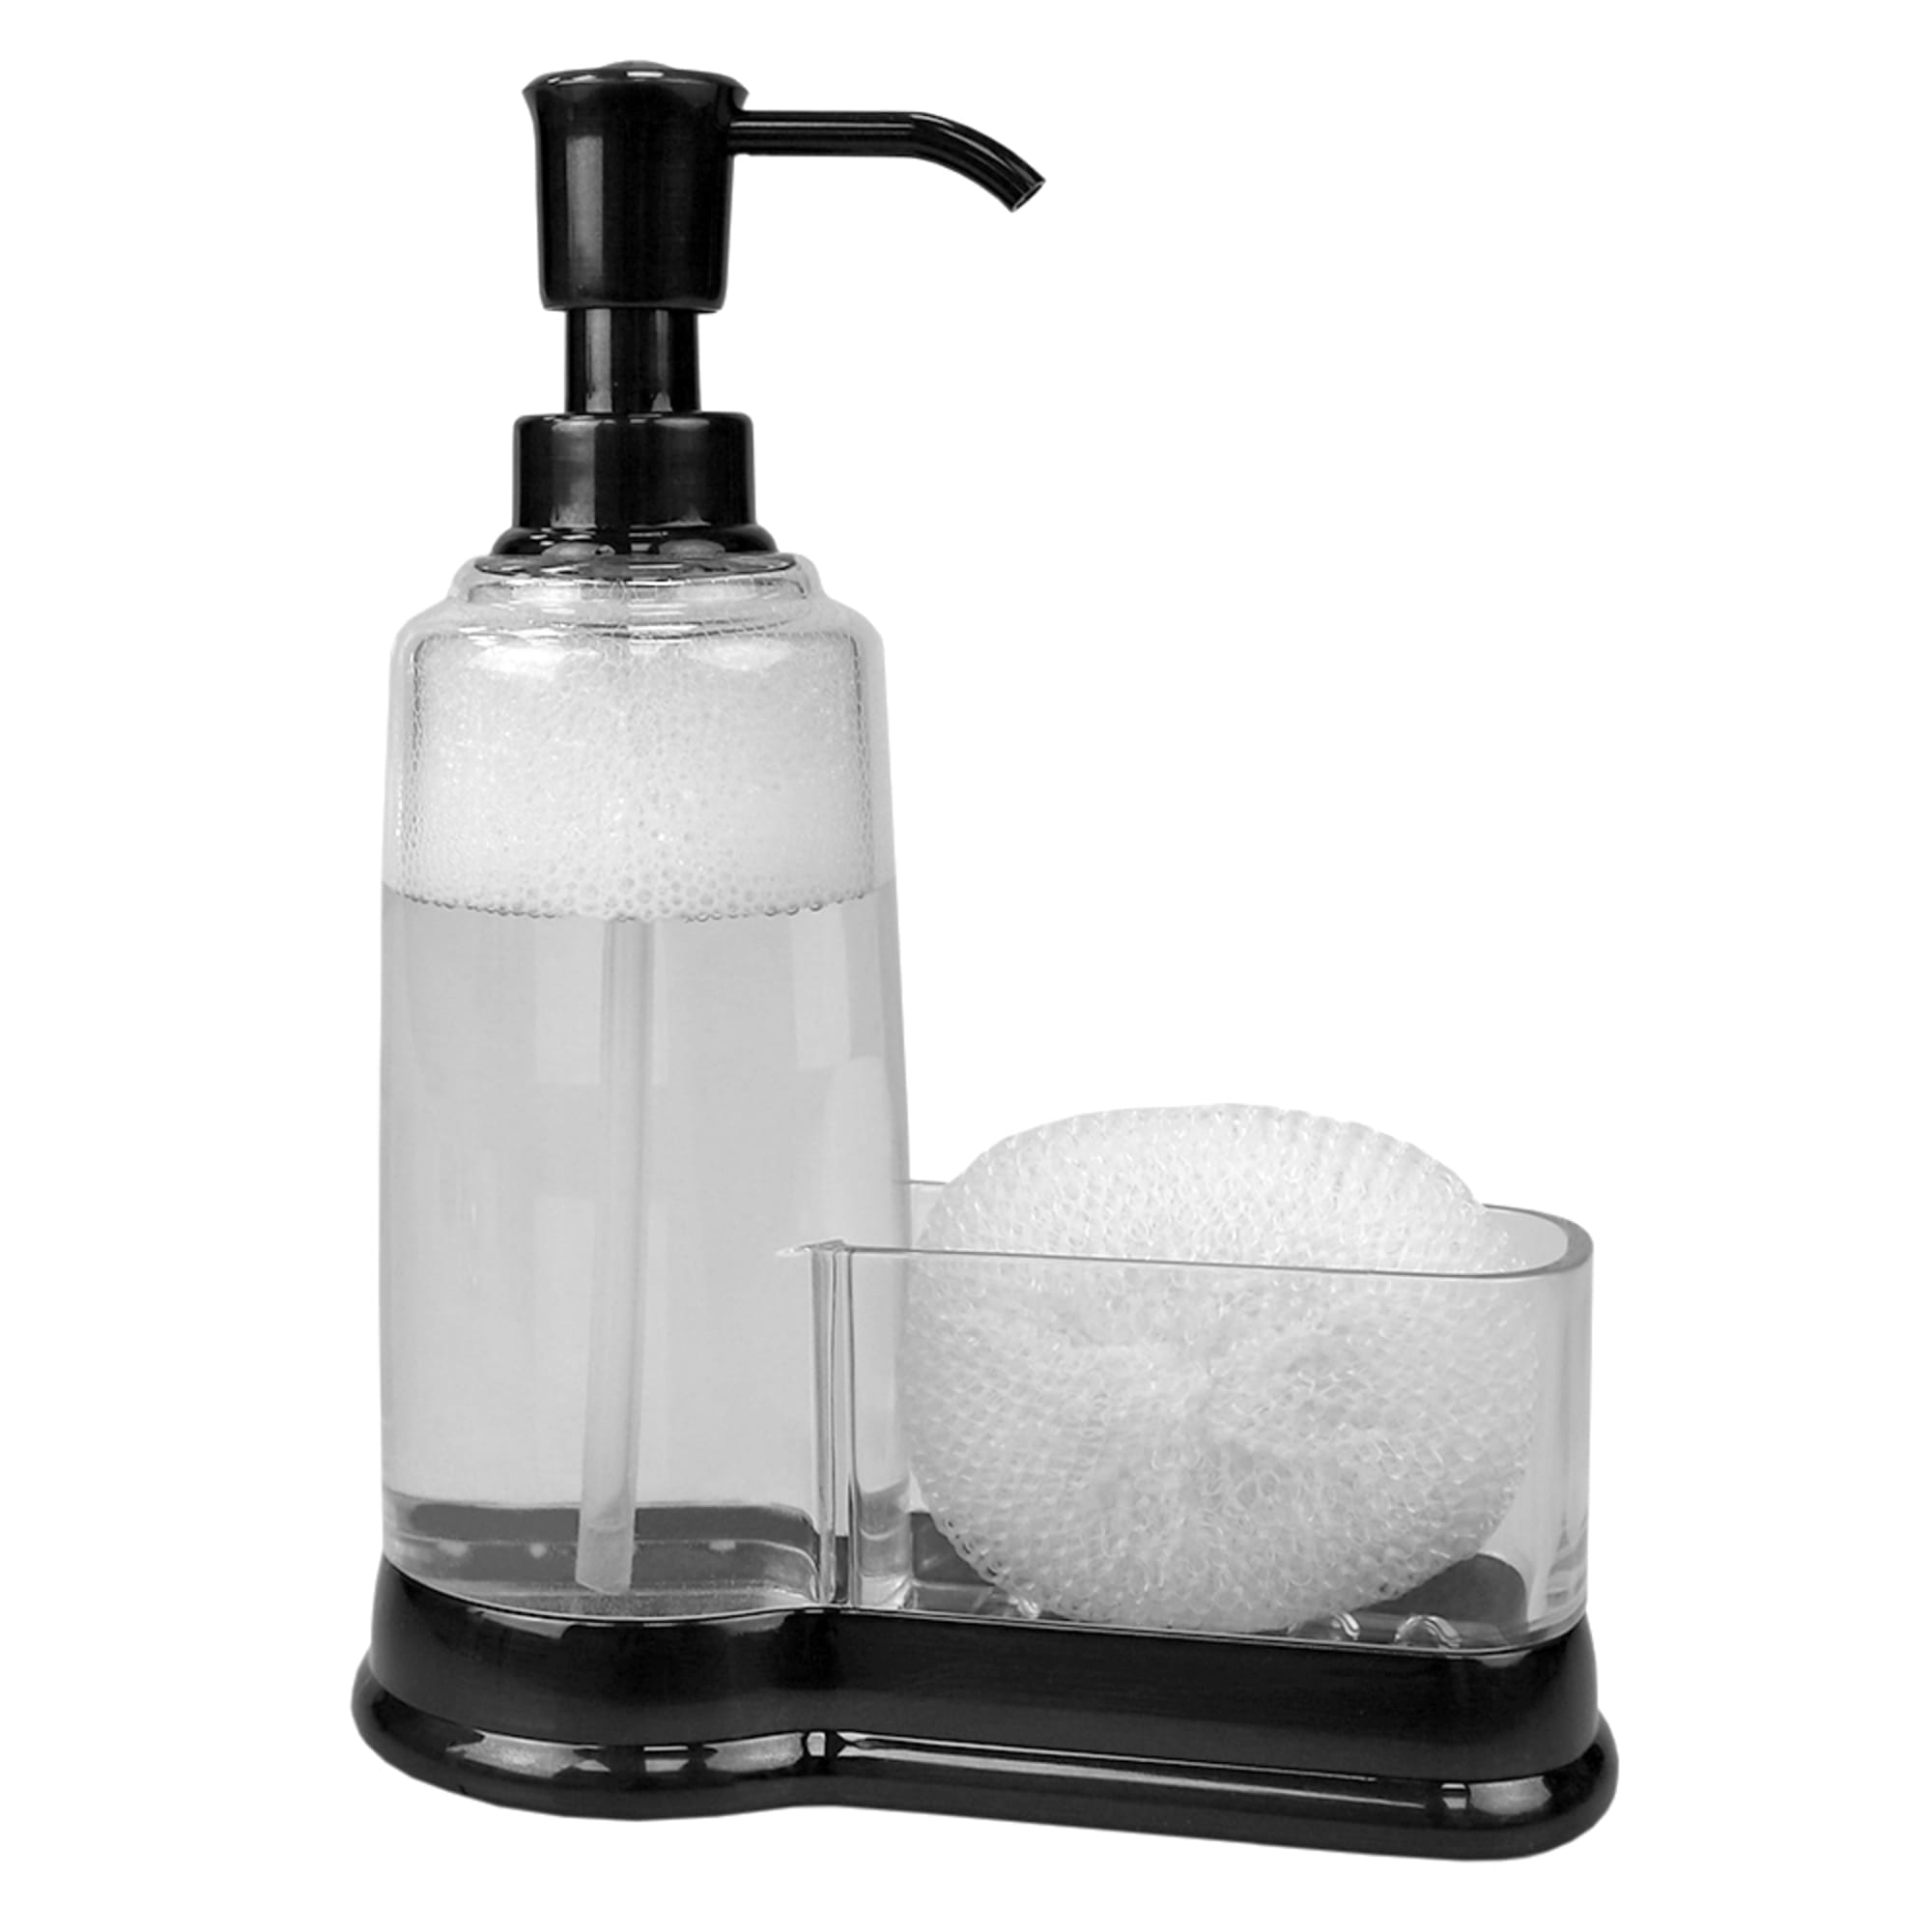 Home Basics Plastic Soap Dispenser with Sponge Compartment, Black $6.00 EACH, CASE PACK OF 12